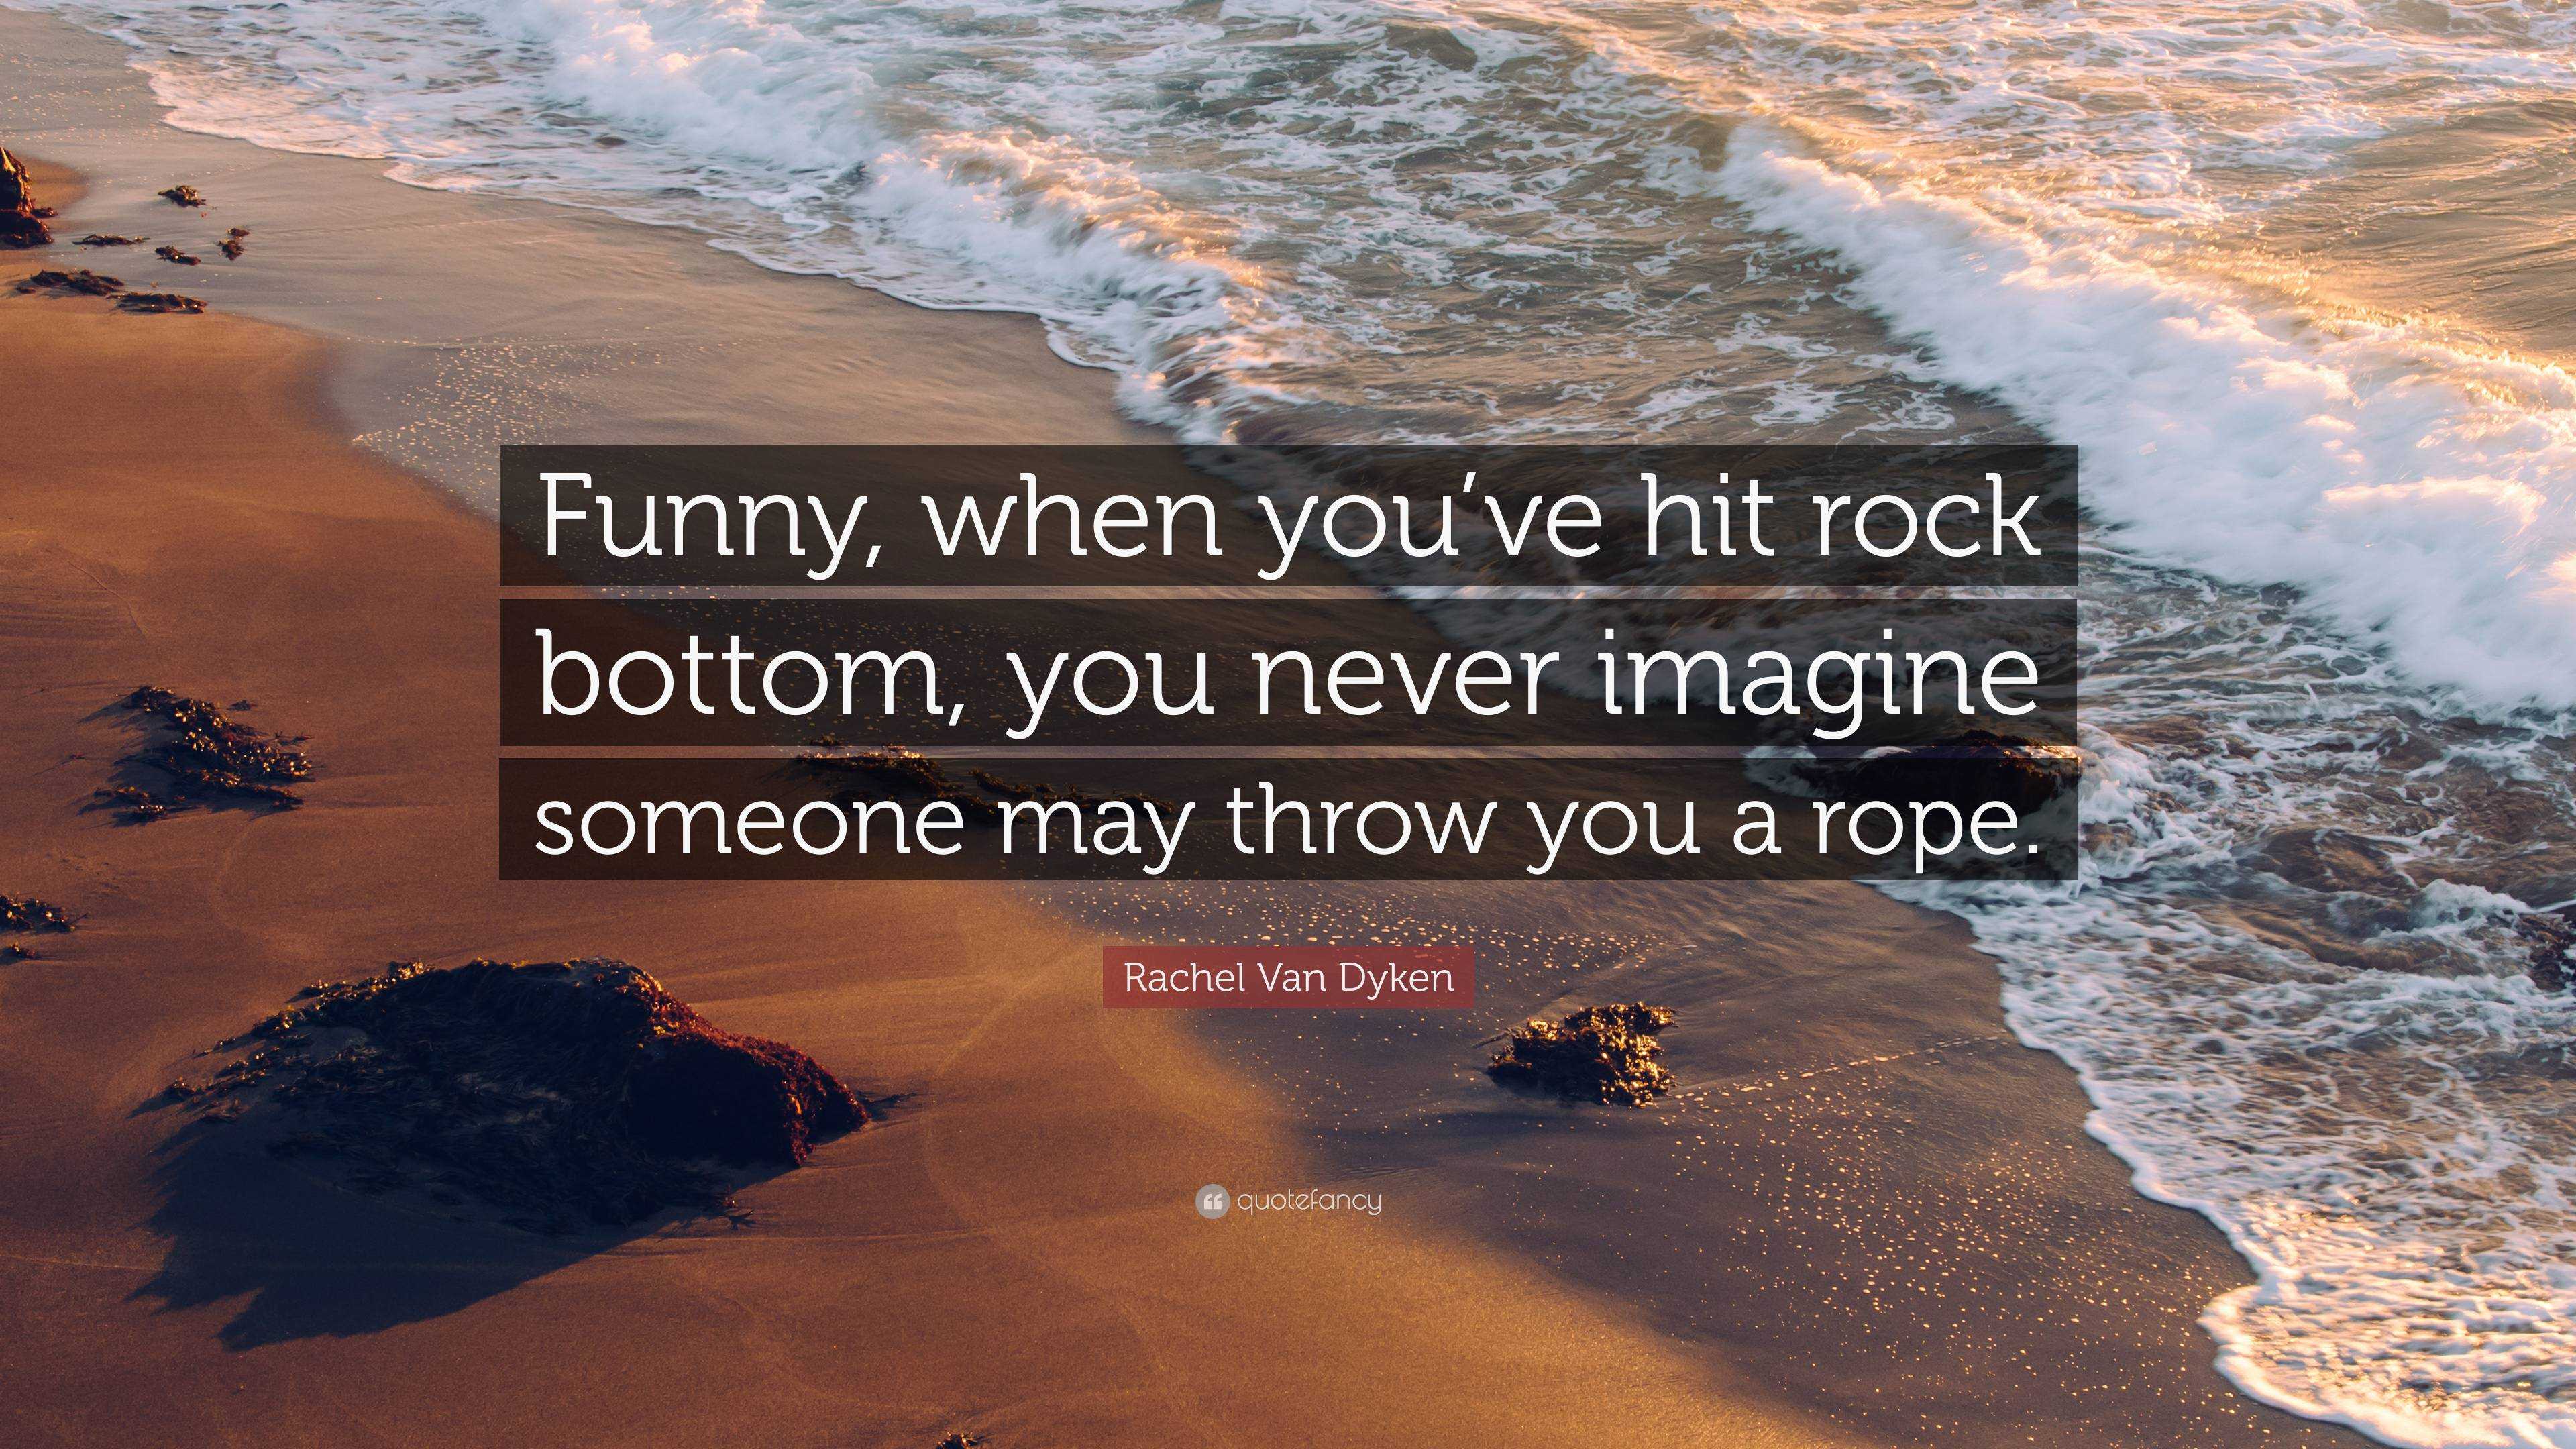 Rachel Van Dyken Quote “funny When You Ve Hit Rock Bottom You Never Imagine Someone May Throw